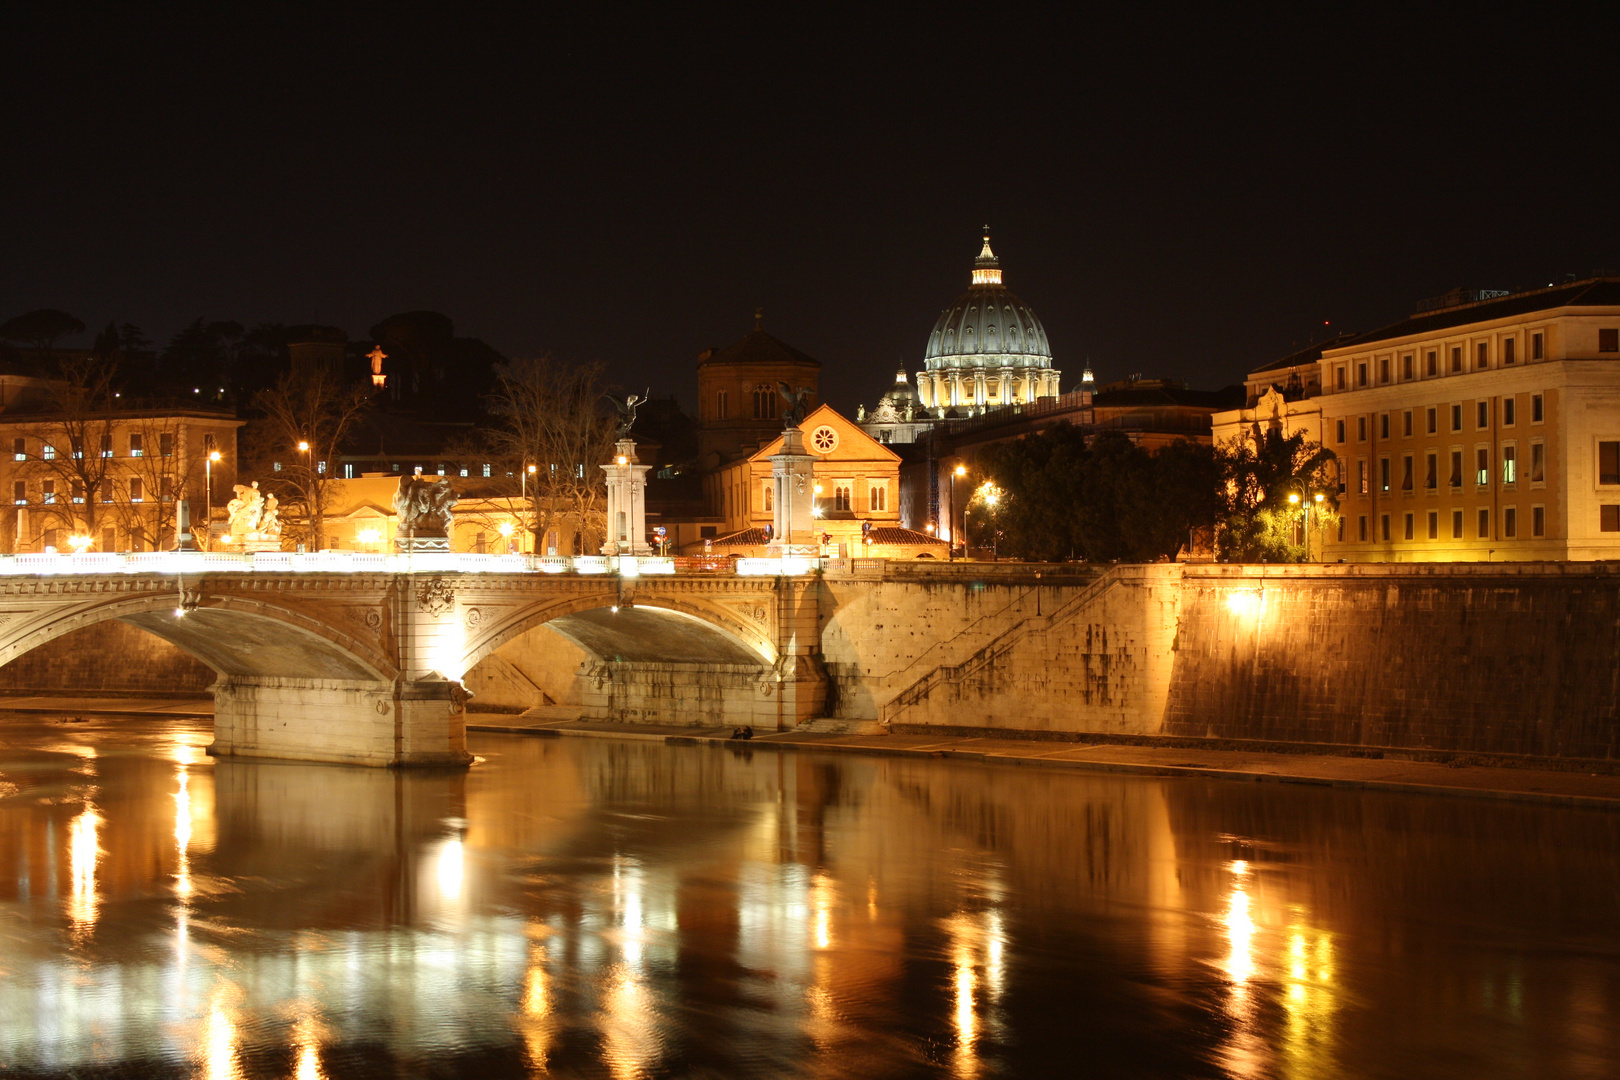 Tiber and St. Peter's Basilica